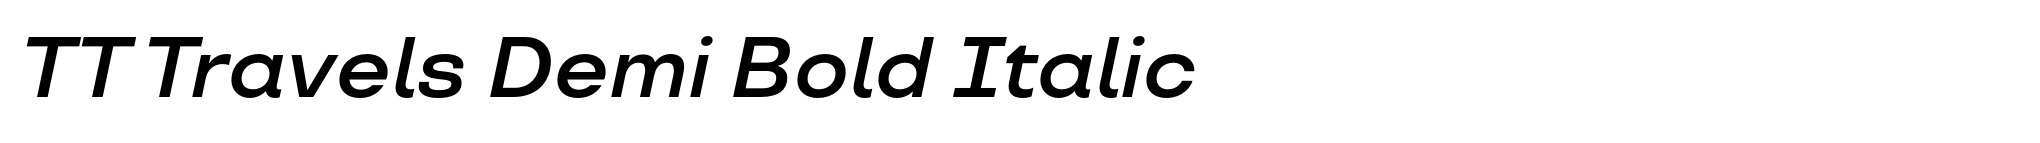 TT Travels Demi Bold Italic image